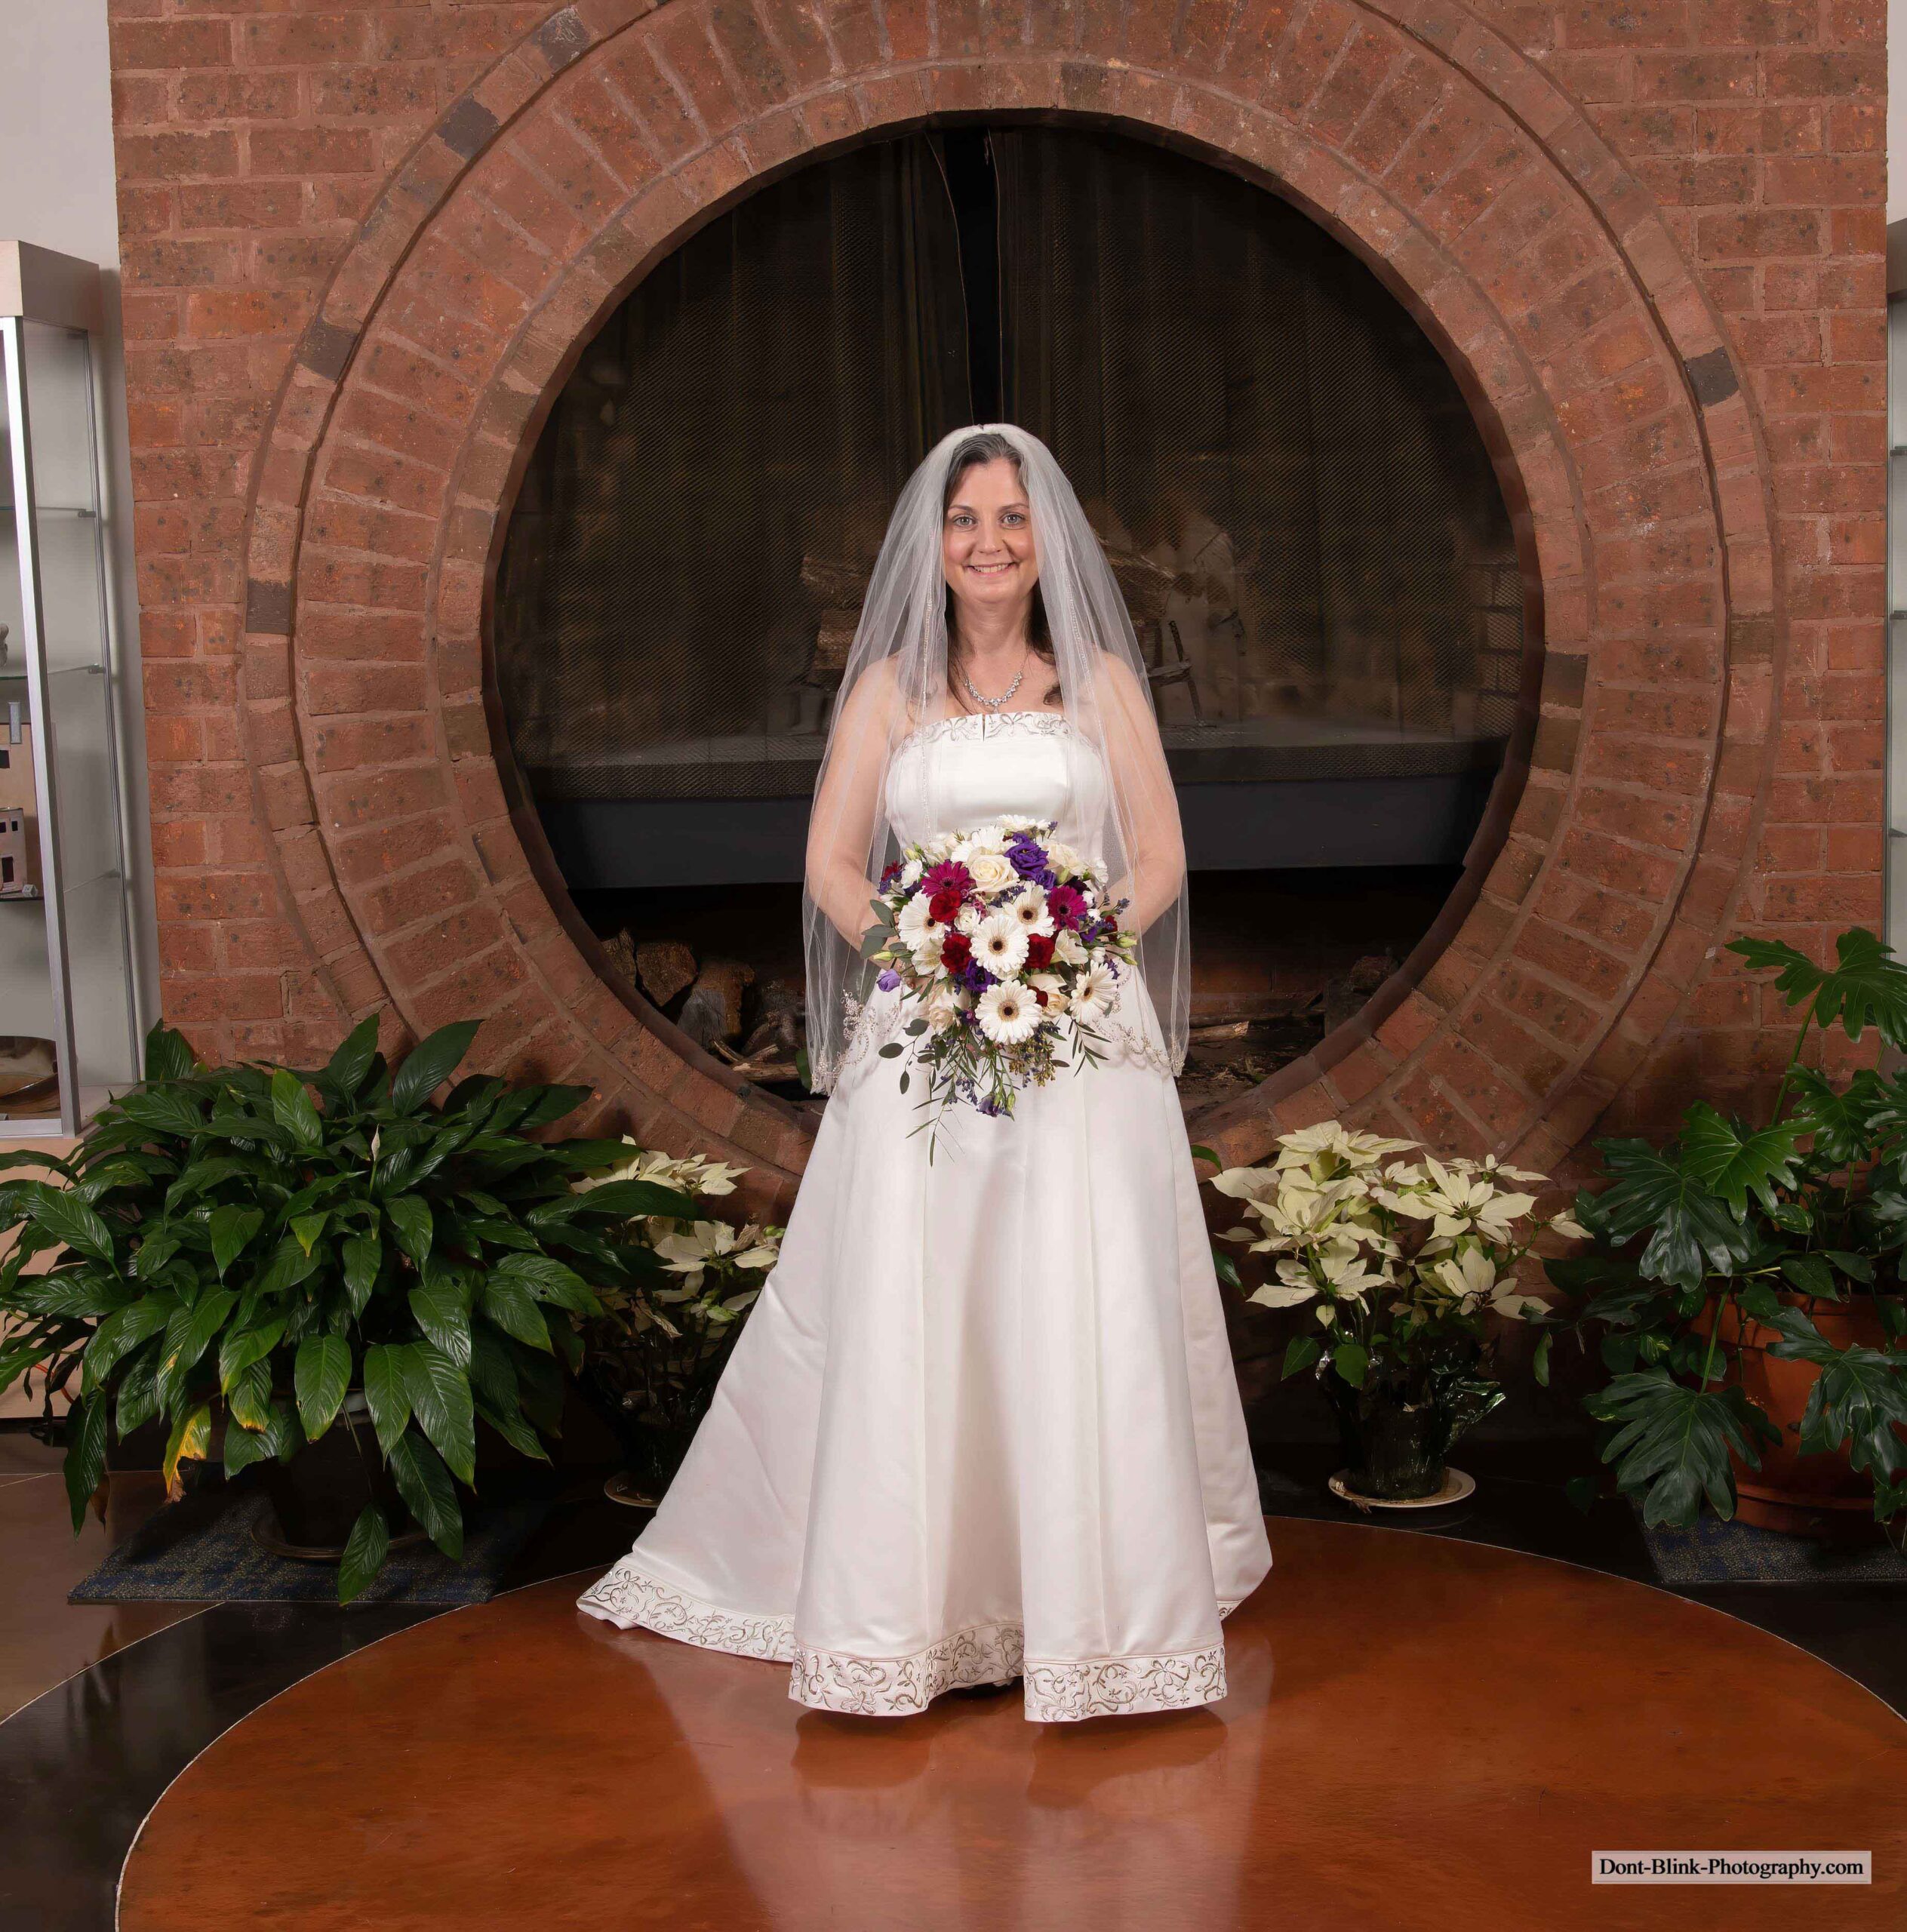 Bride leans forward in dress